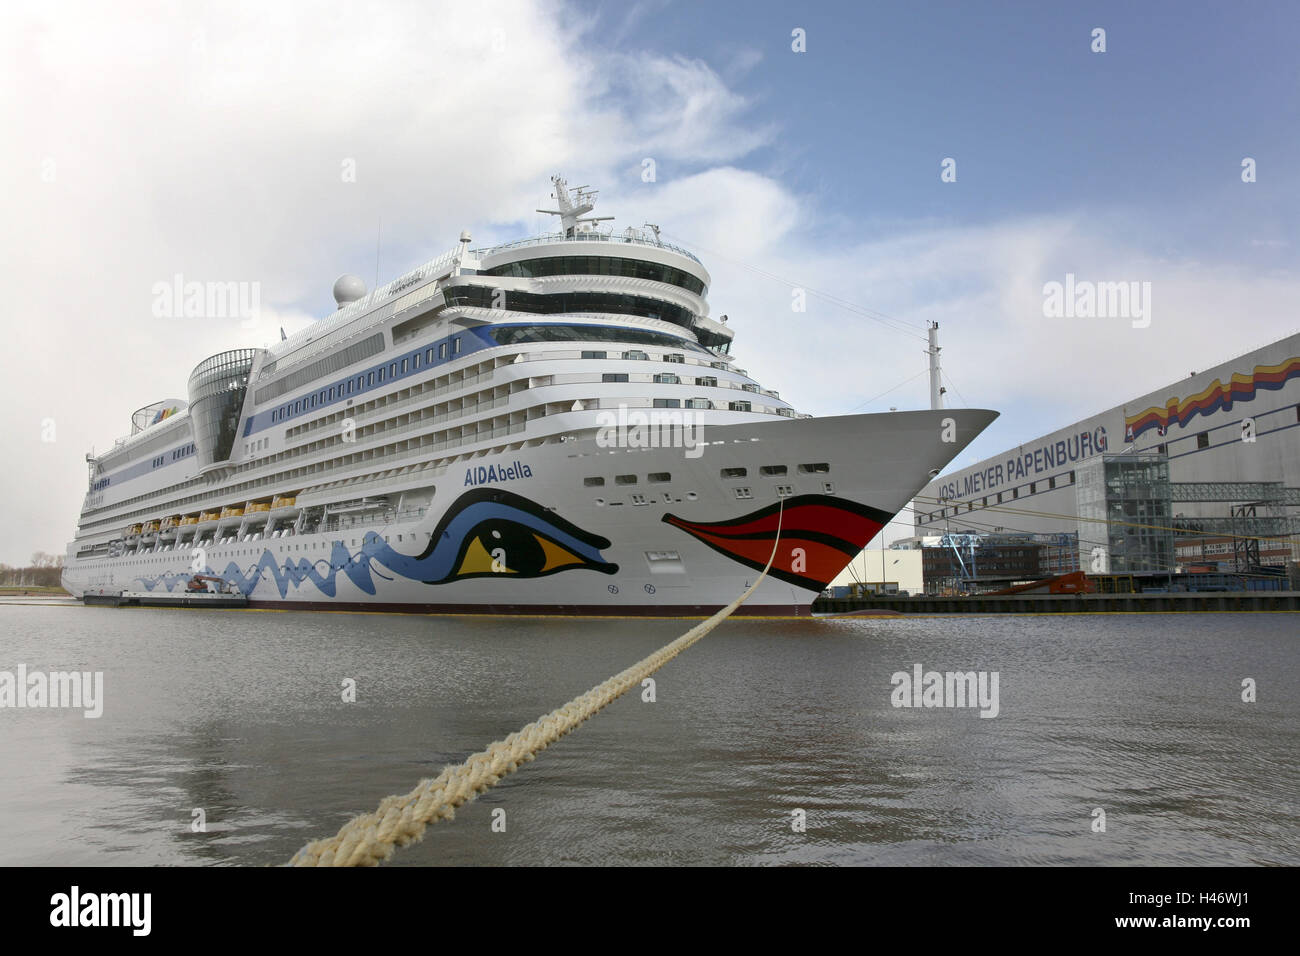 Germany, Lower Saxony, castle Papen, Meyer shipyard, cruise ship, AIDAbella, Stock Photo